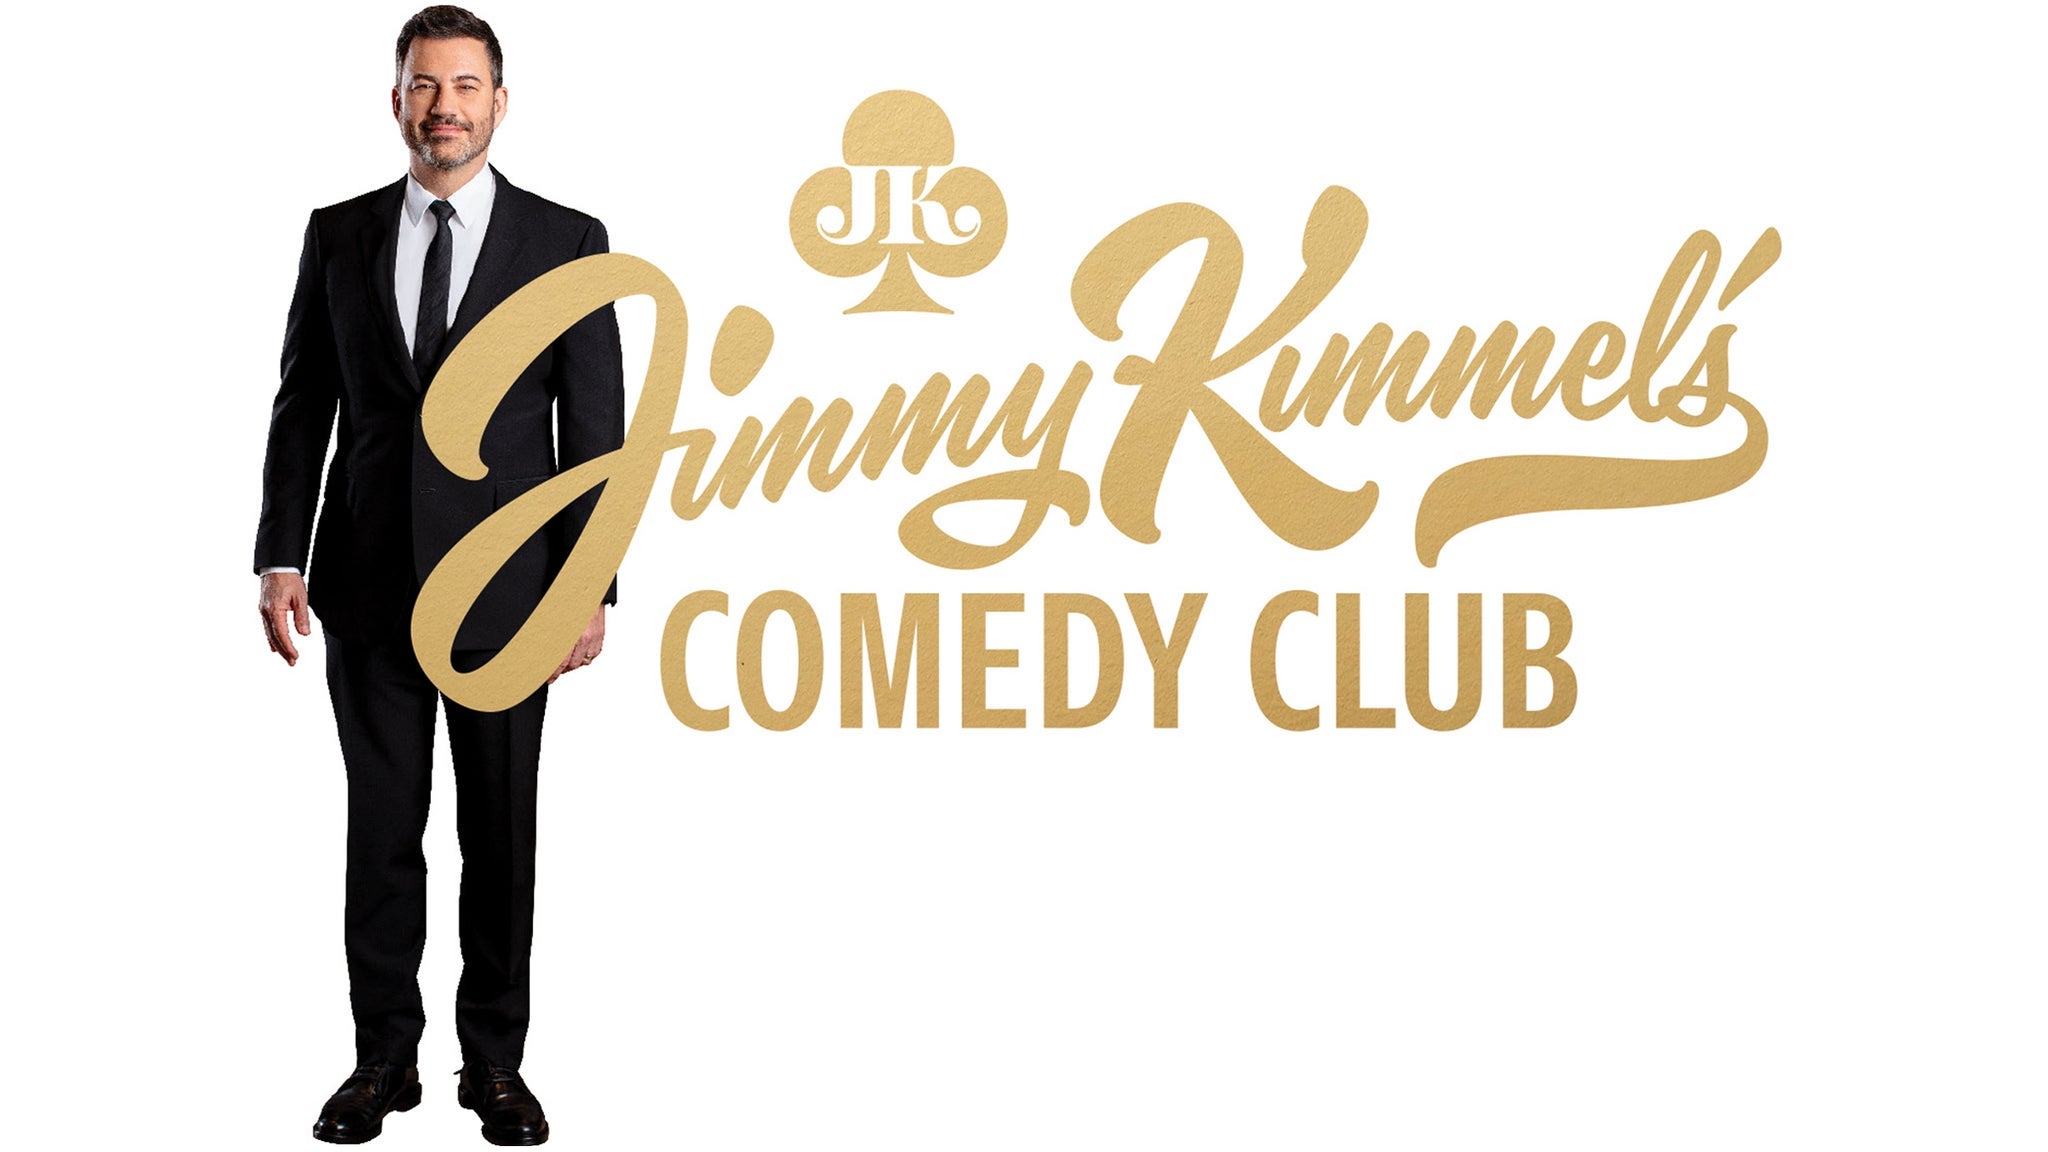 Josh Wolf at Jimmy Kimmel's Comedy Club